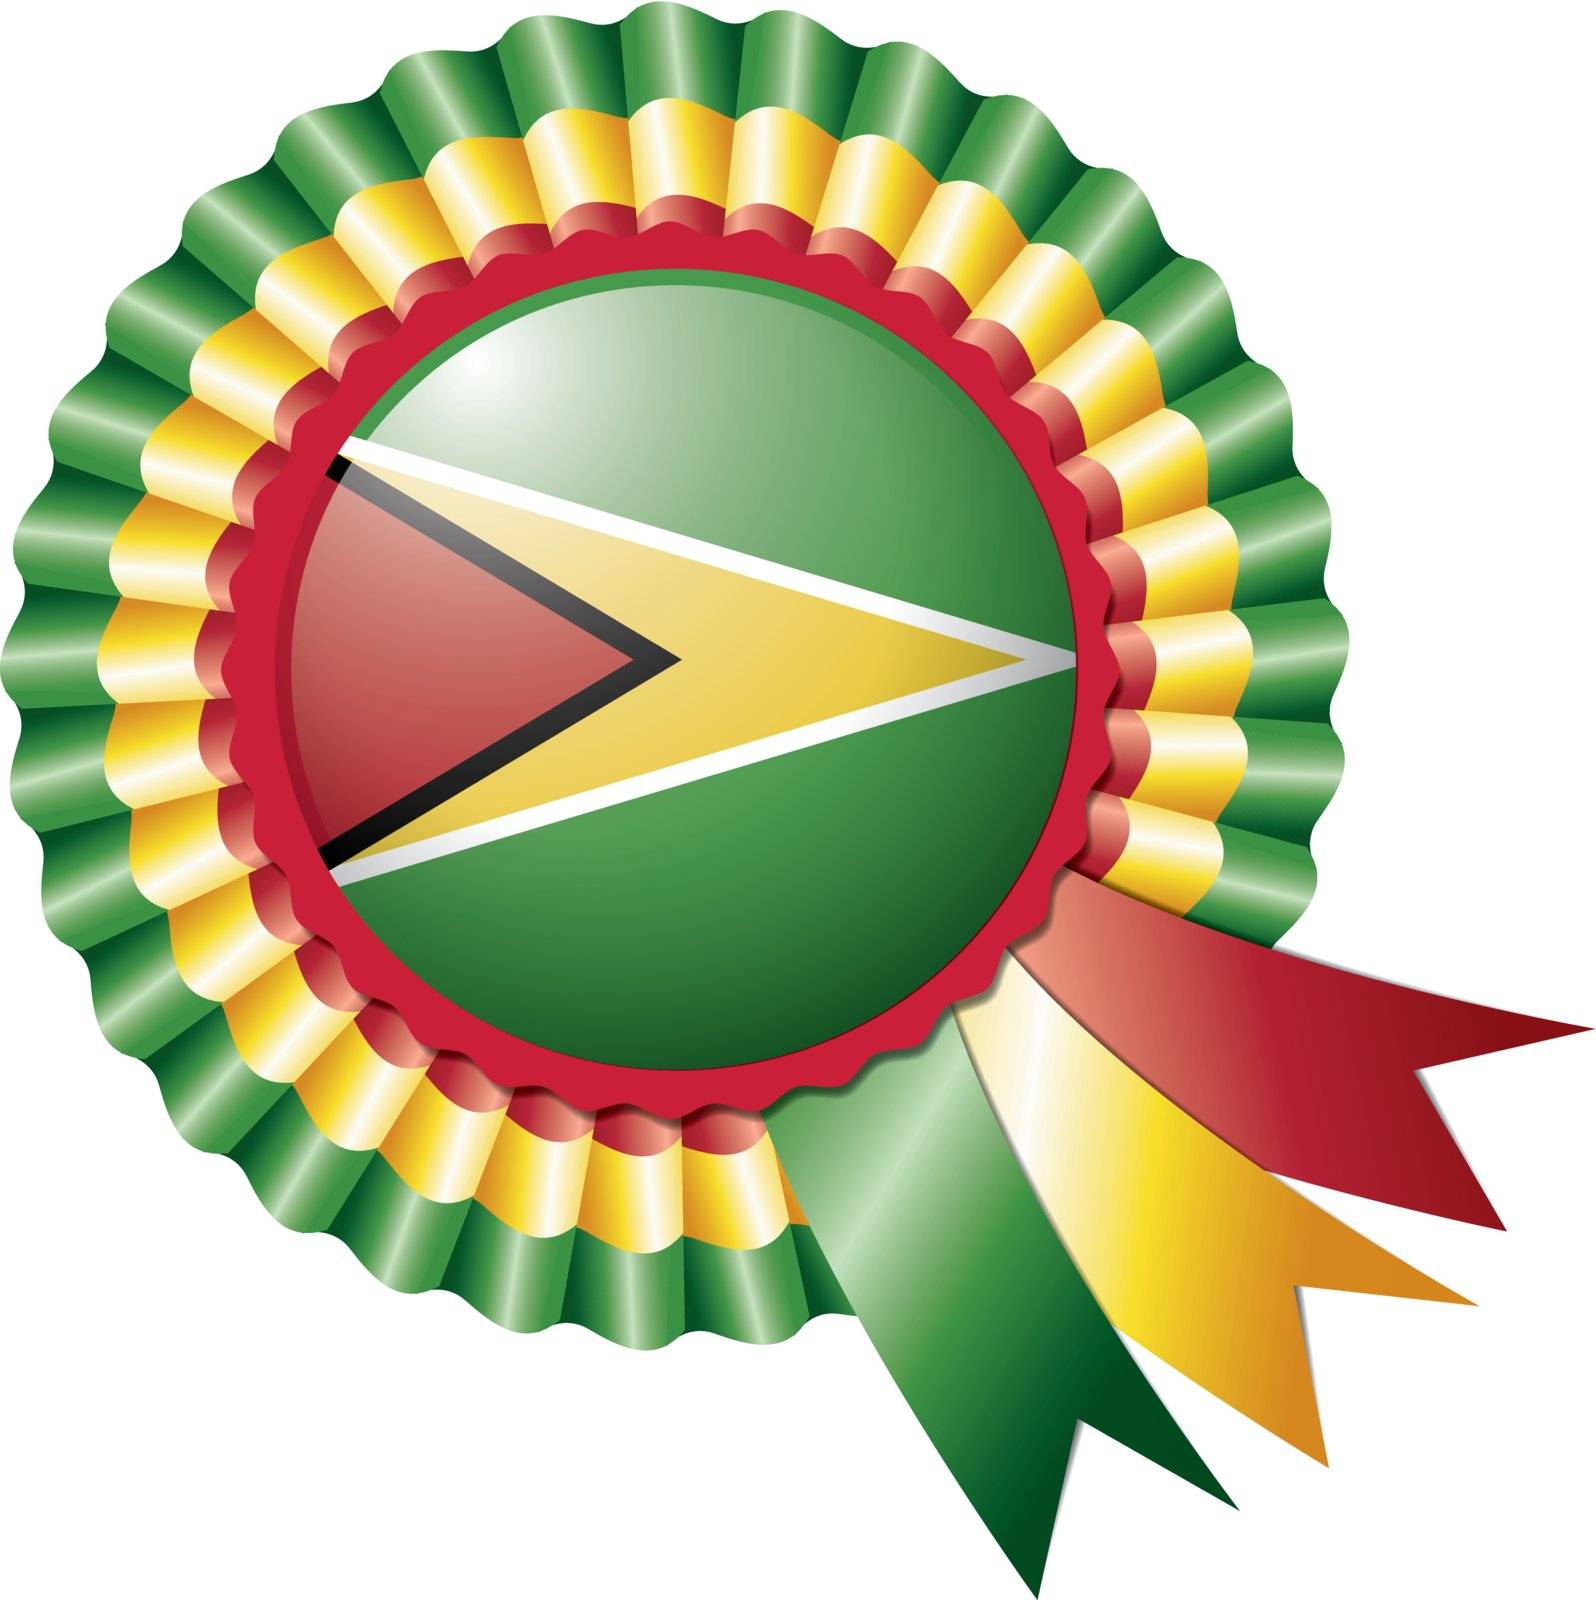 Guyana rosette flag by milinz